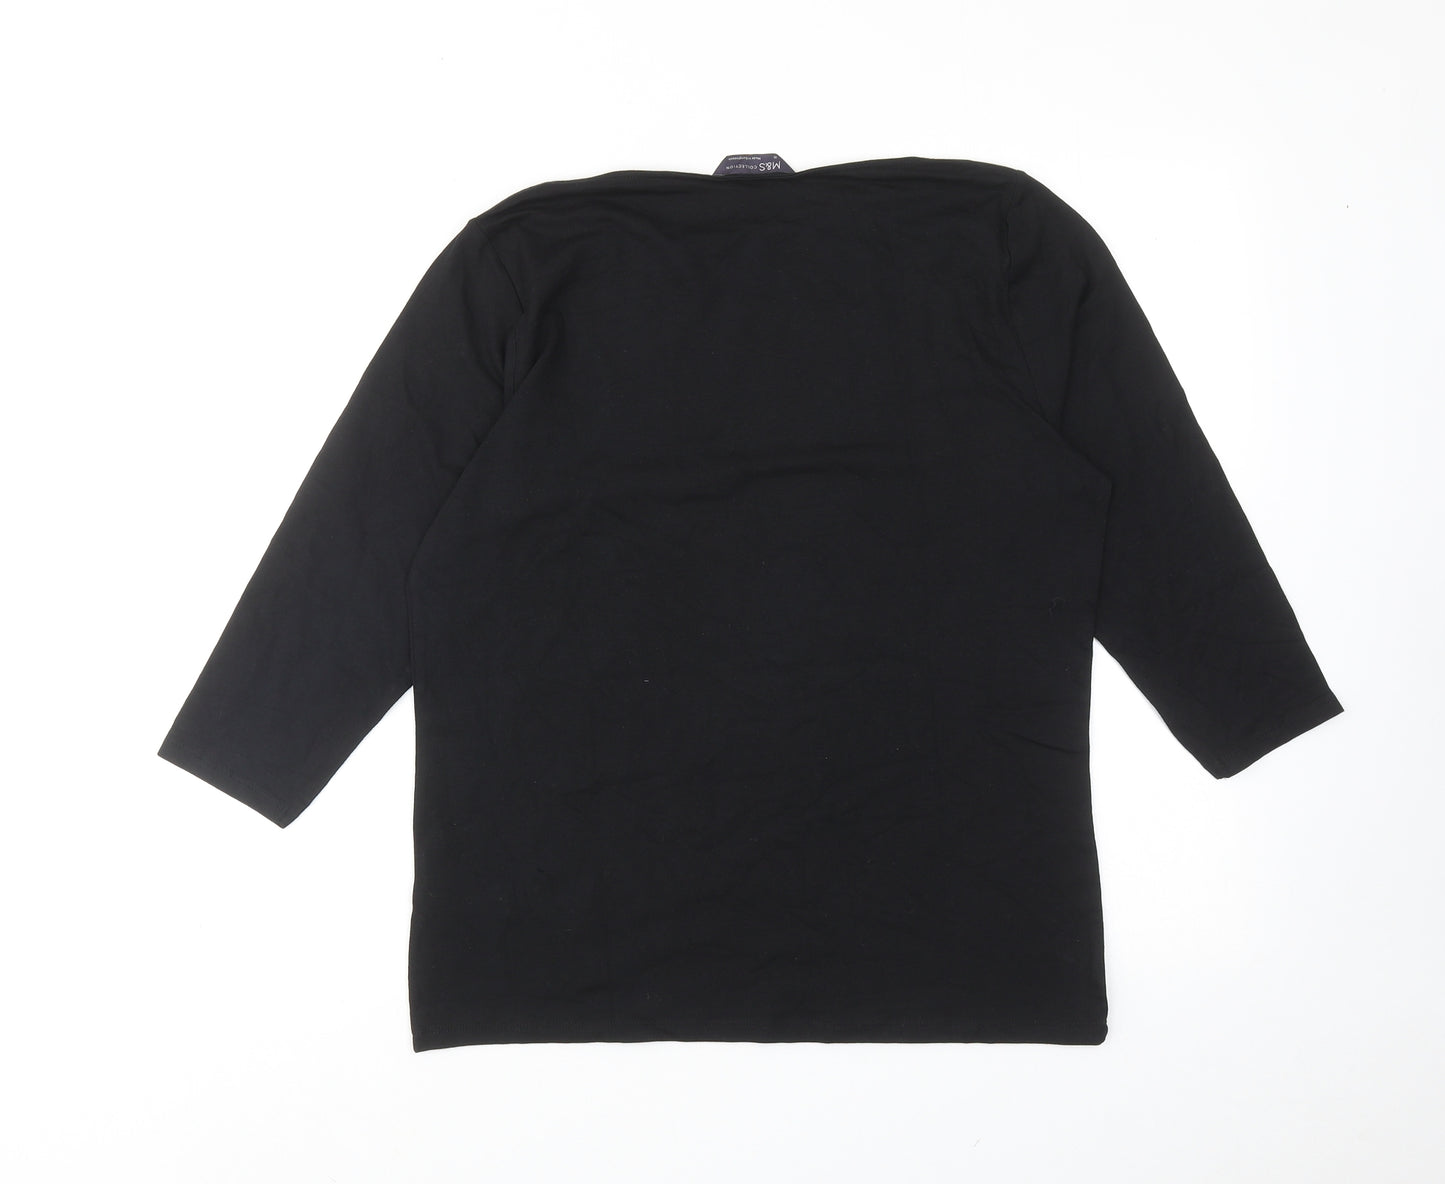 Marks and Spencer Womens Black Cotton Basic Blouse Size 16 V-Neck